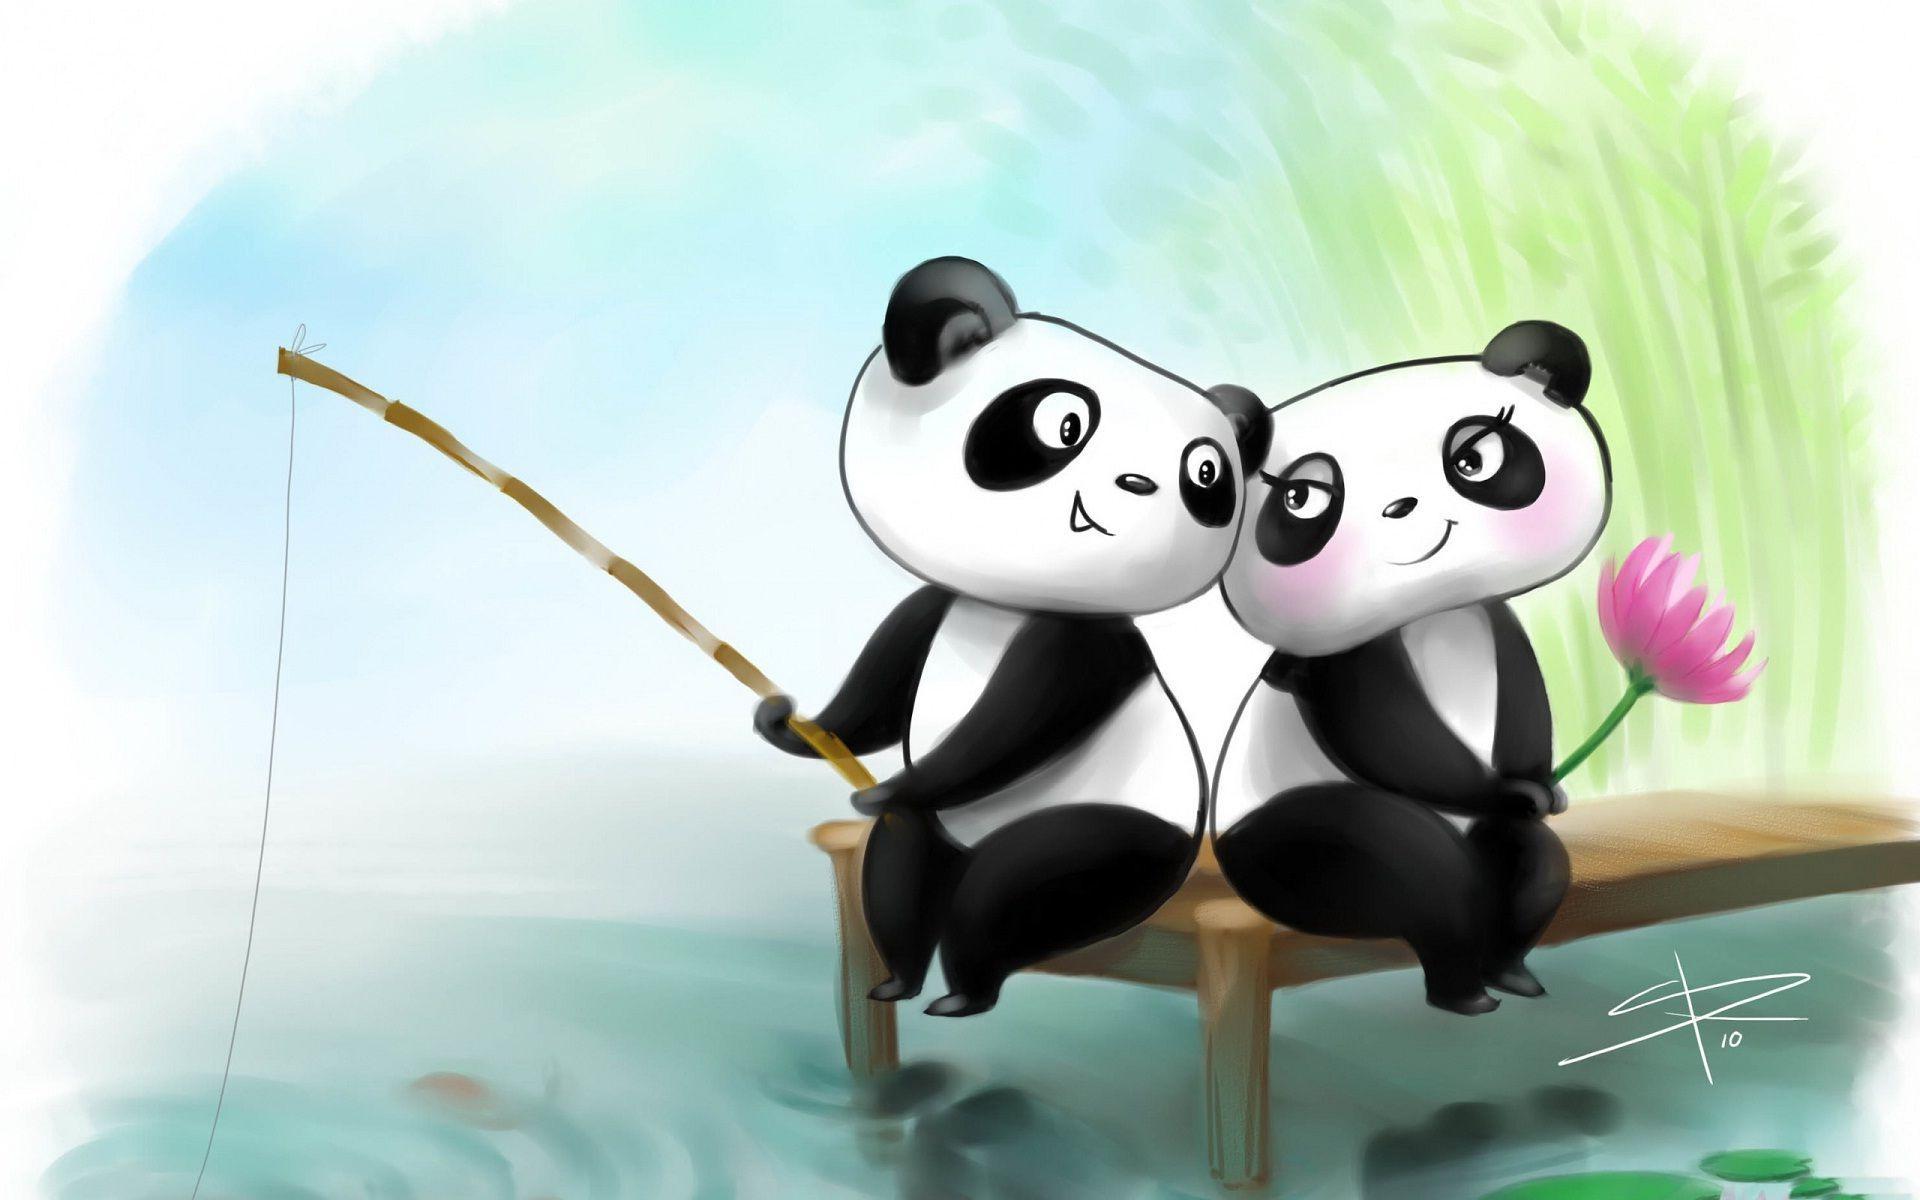 Panda #Love  Panda desenho, Festa de panda, Pandas